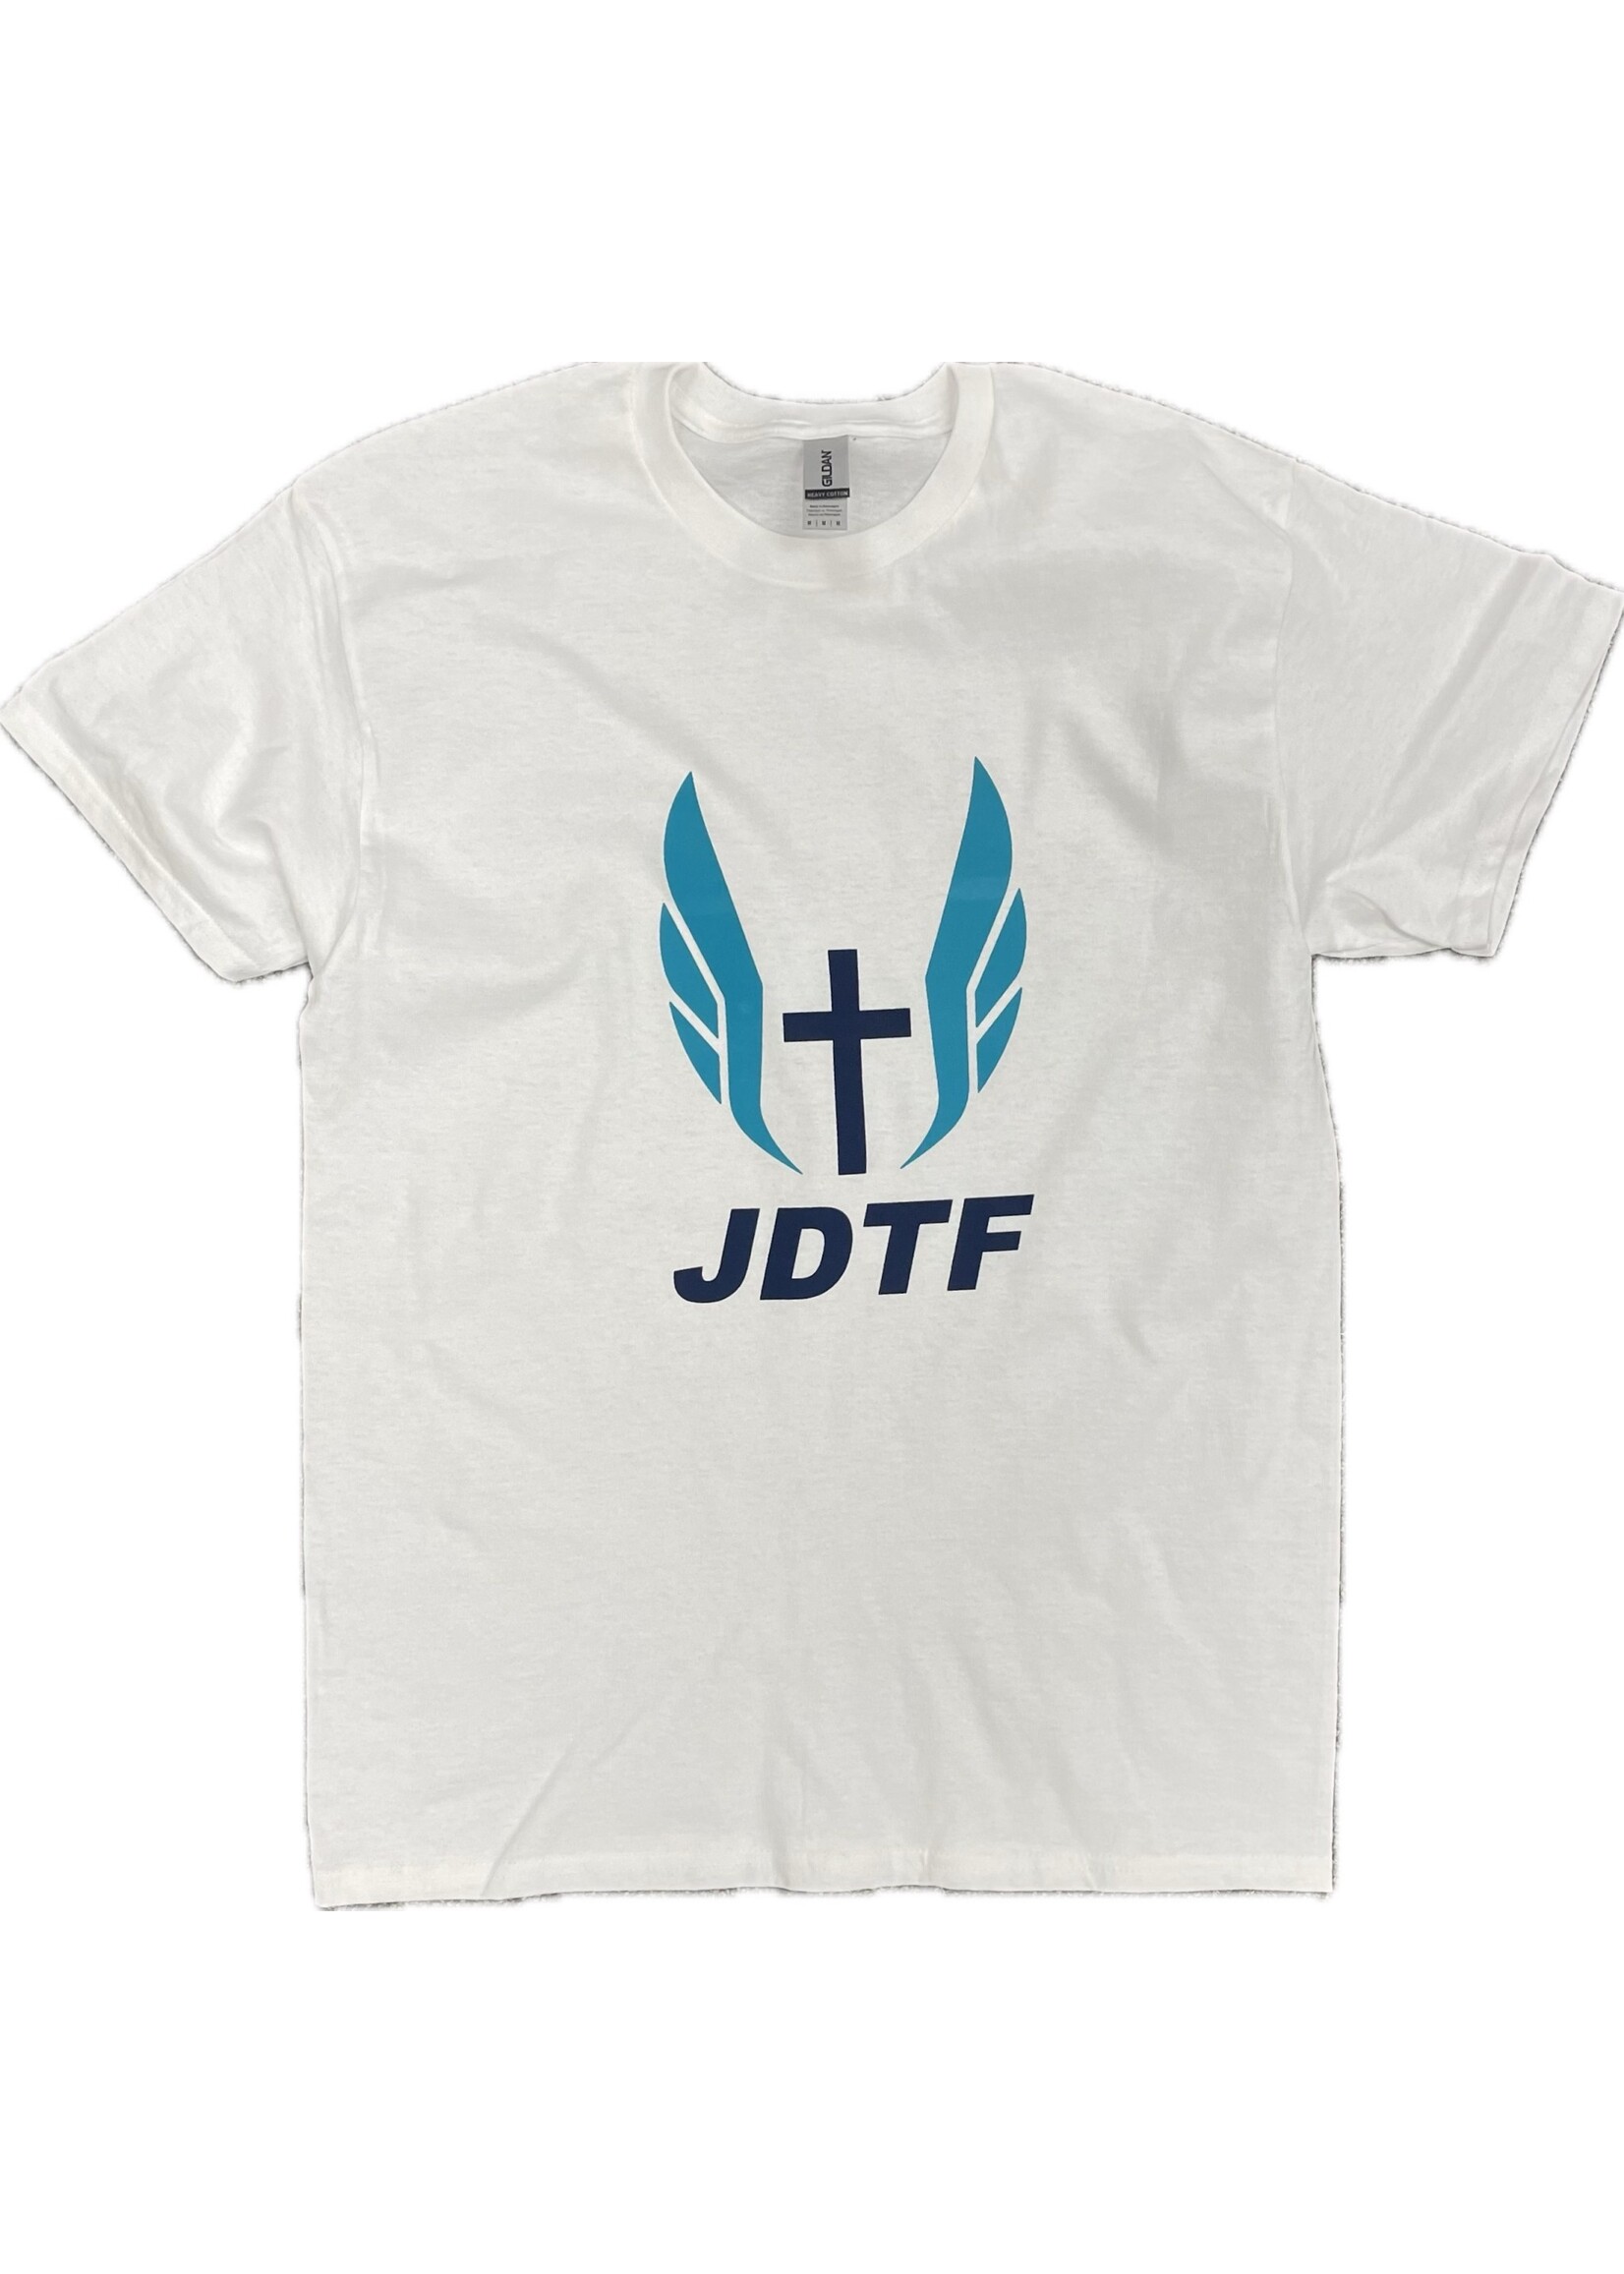 NON-UNIFORM JDTF large logo Track & Field  Unisex S/S Shirt